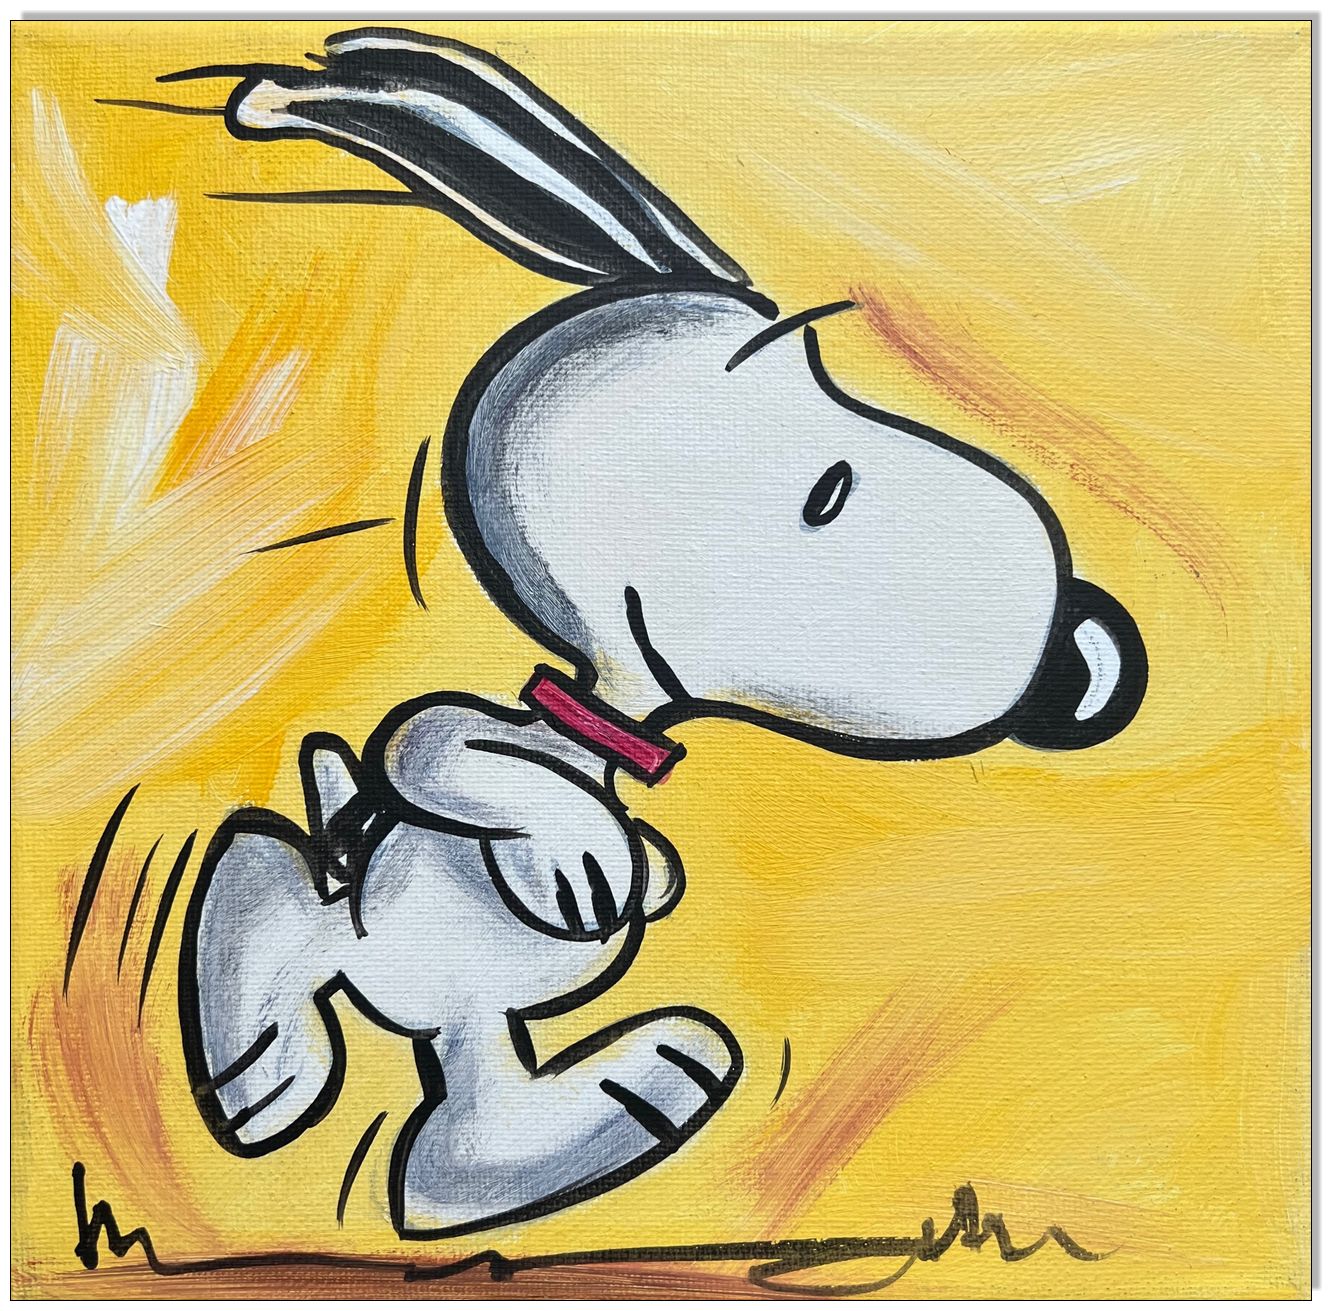 PEANUTS Running Snoopy III - 20 x 20 cm